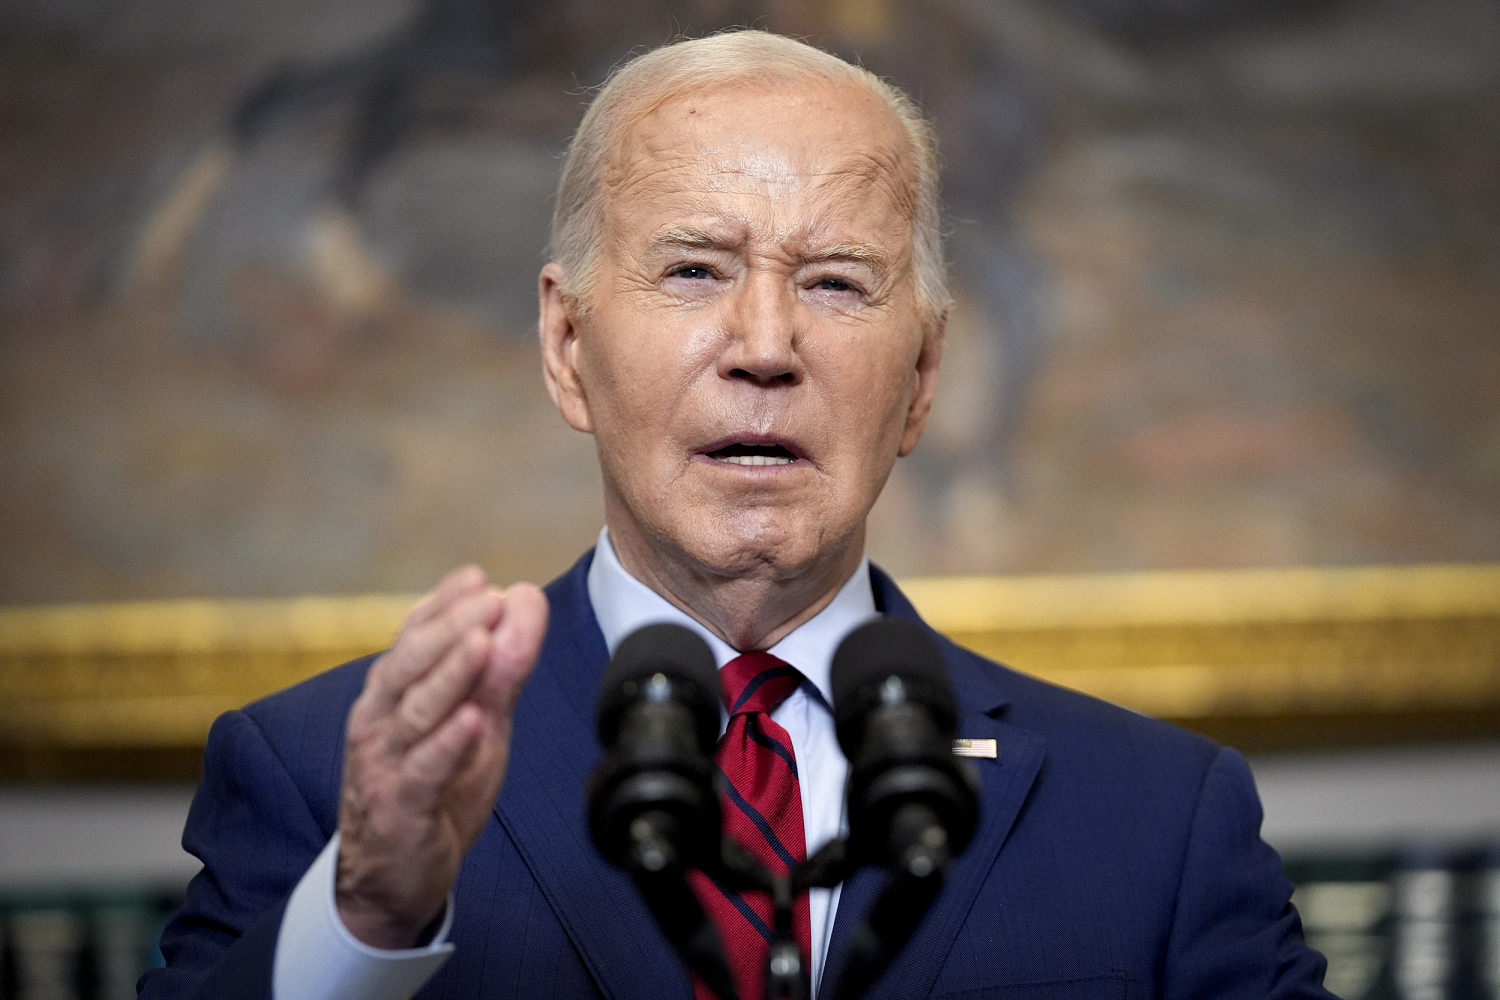 Biden condemns campus violence: 'Order must prevail'